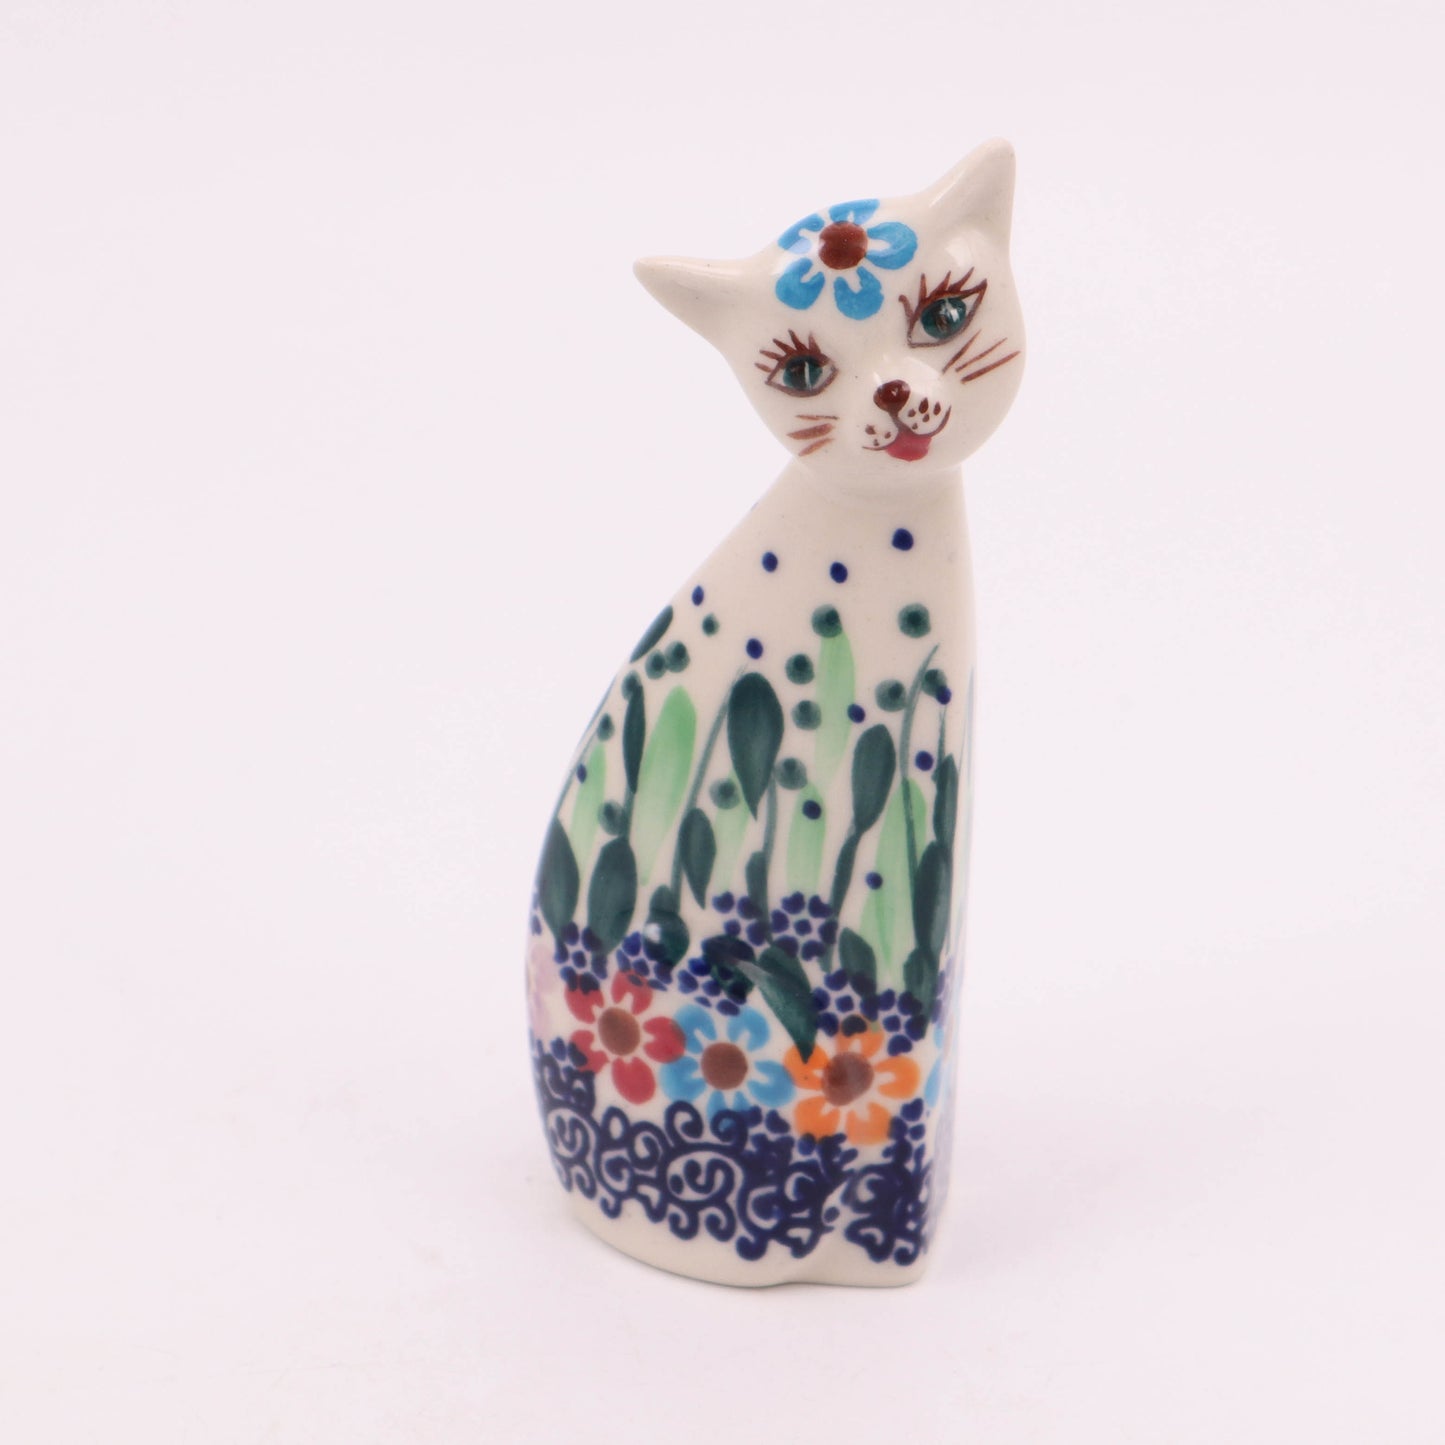 2"x4.5" Standing Cat Figurine. Pattern: Daisy